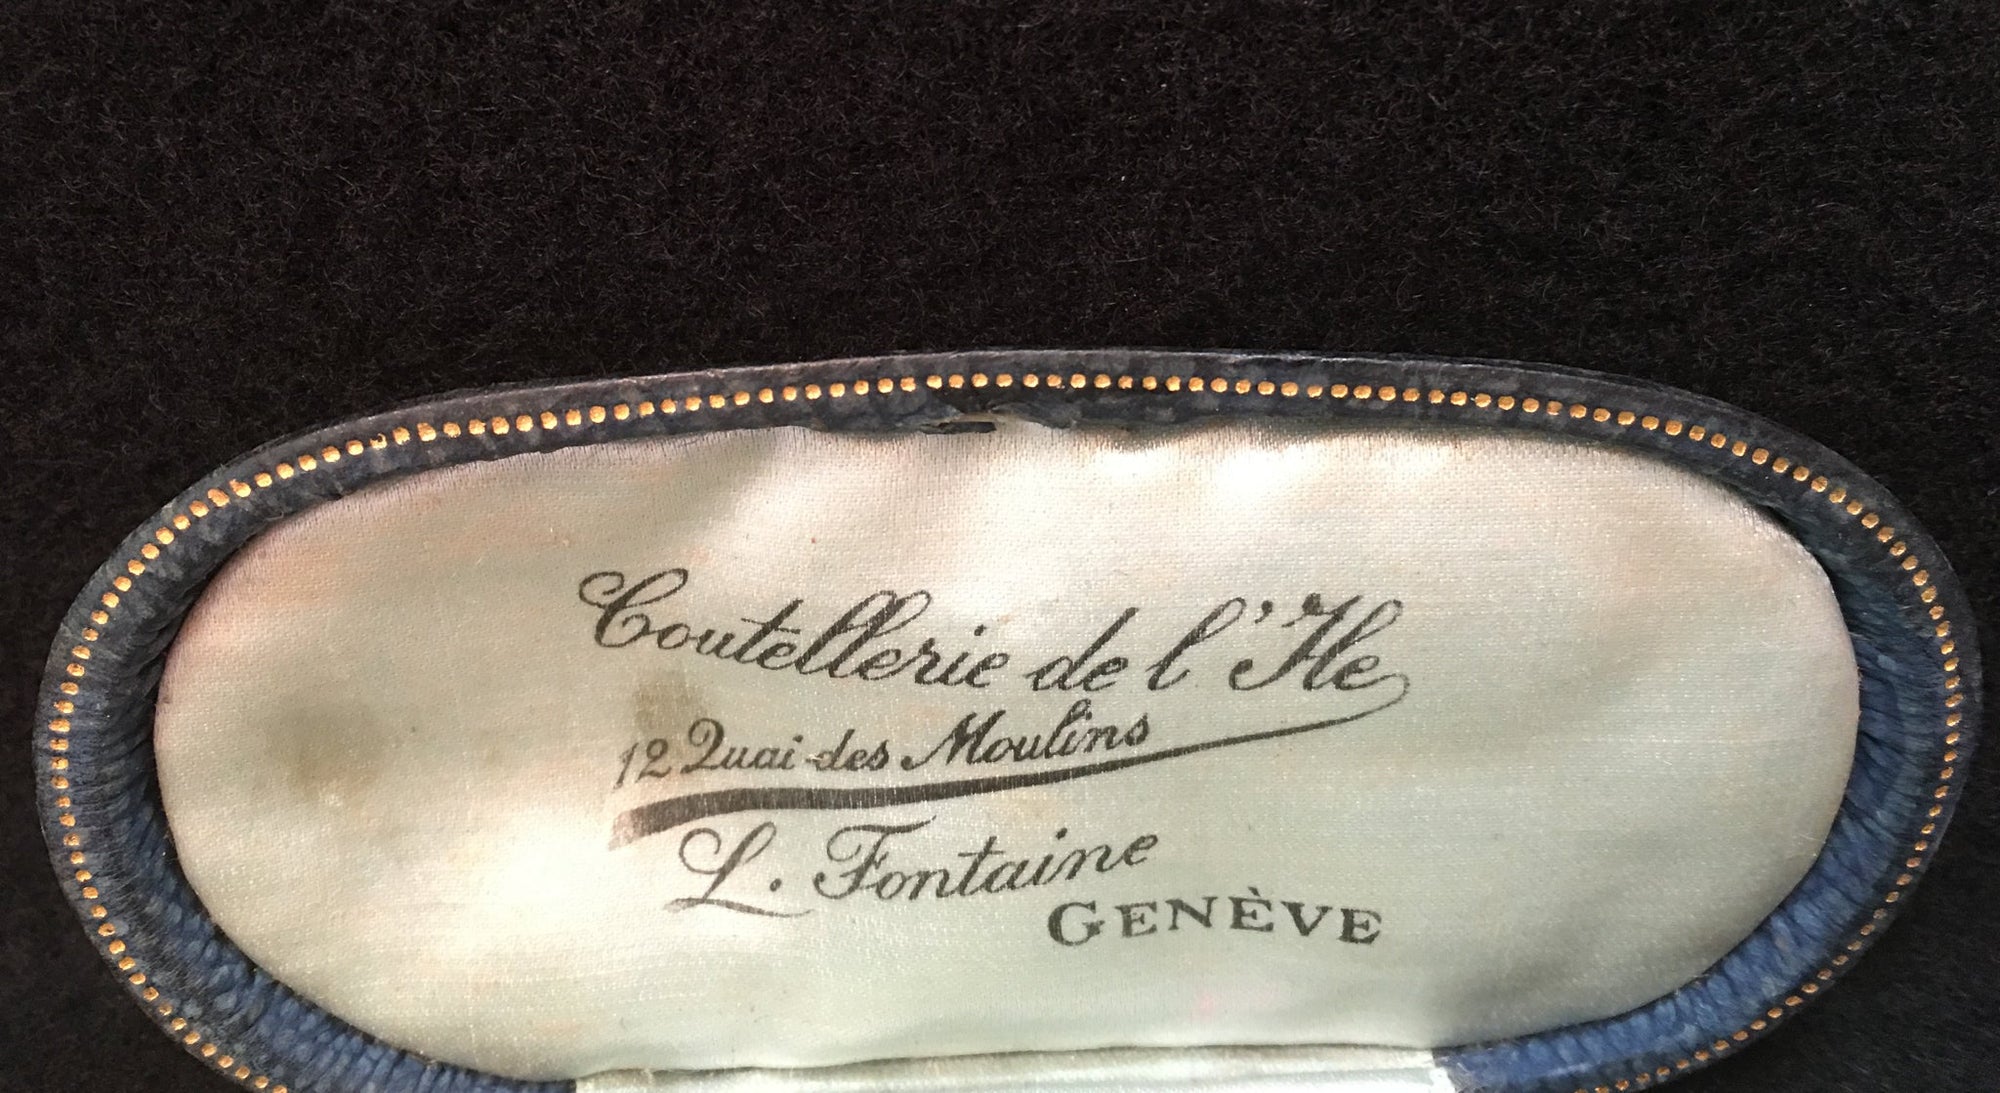 Swiss Thread Scissors and Thimble in a Geneva, Switzerland Leather Case